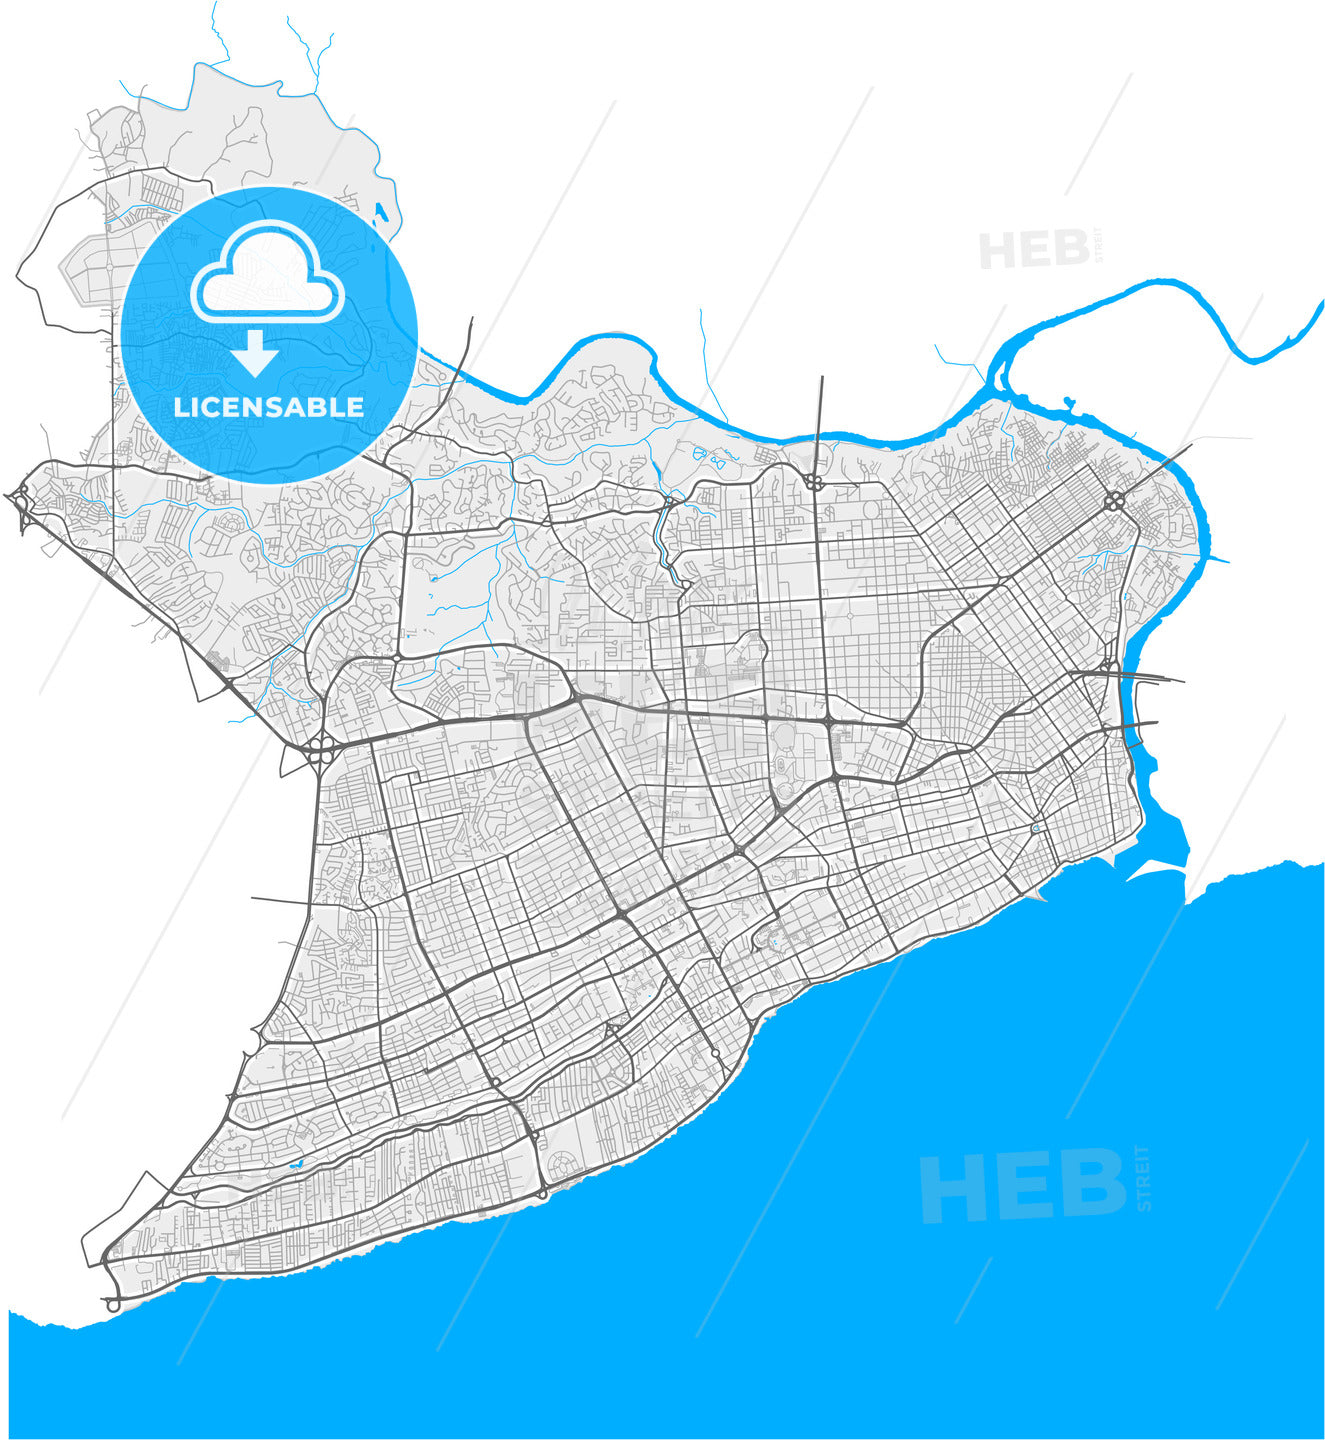 Santo Domingo, Distrito Nacional, Dominican Republic, high quality vector map